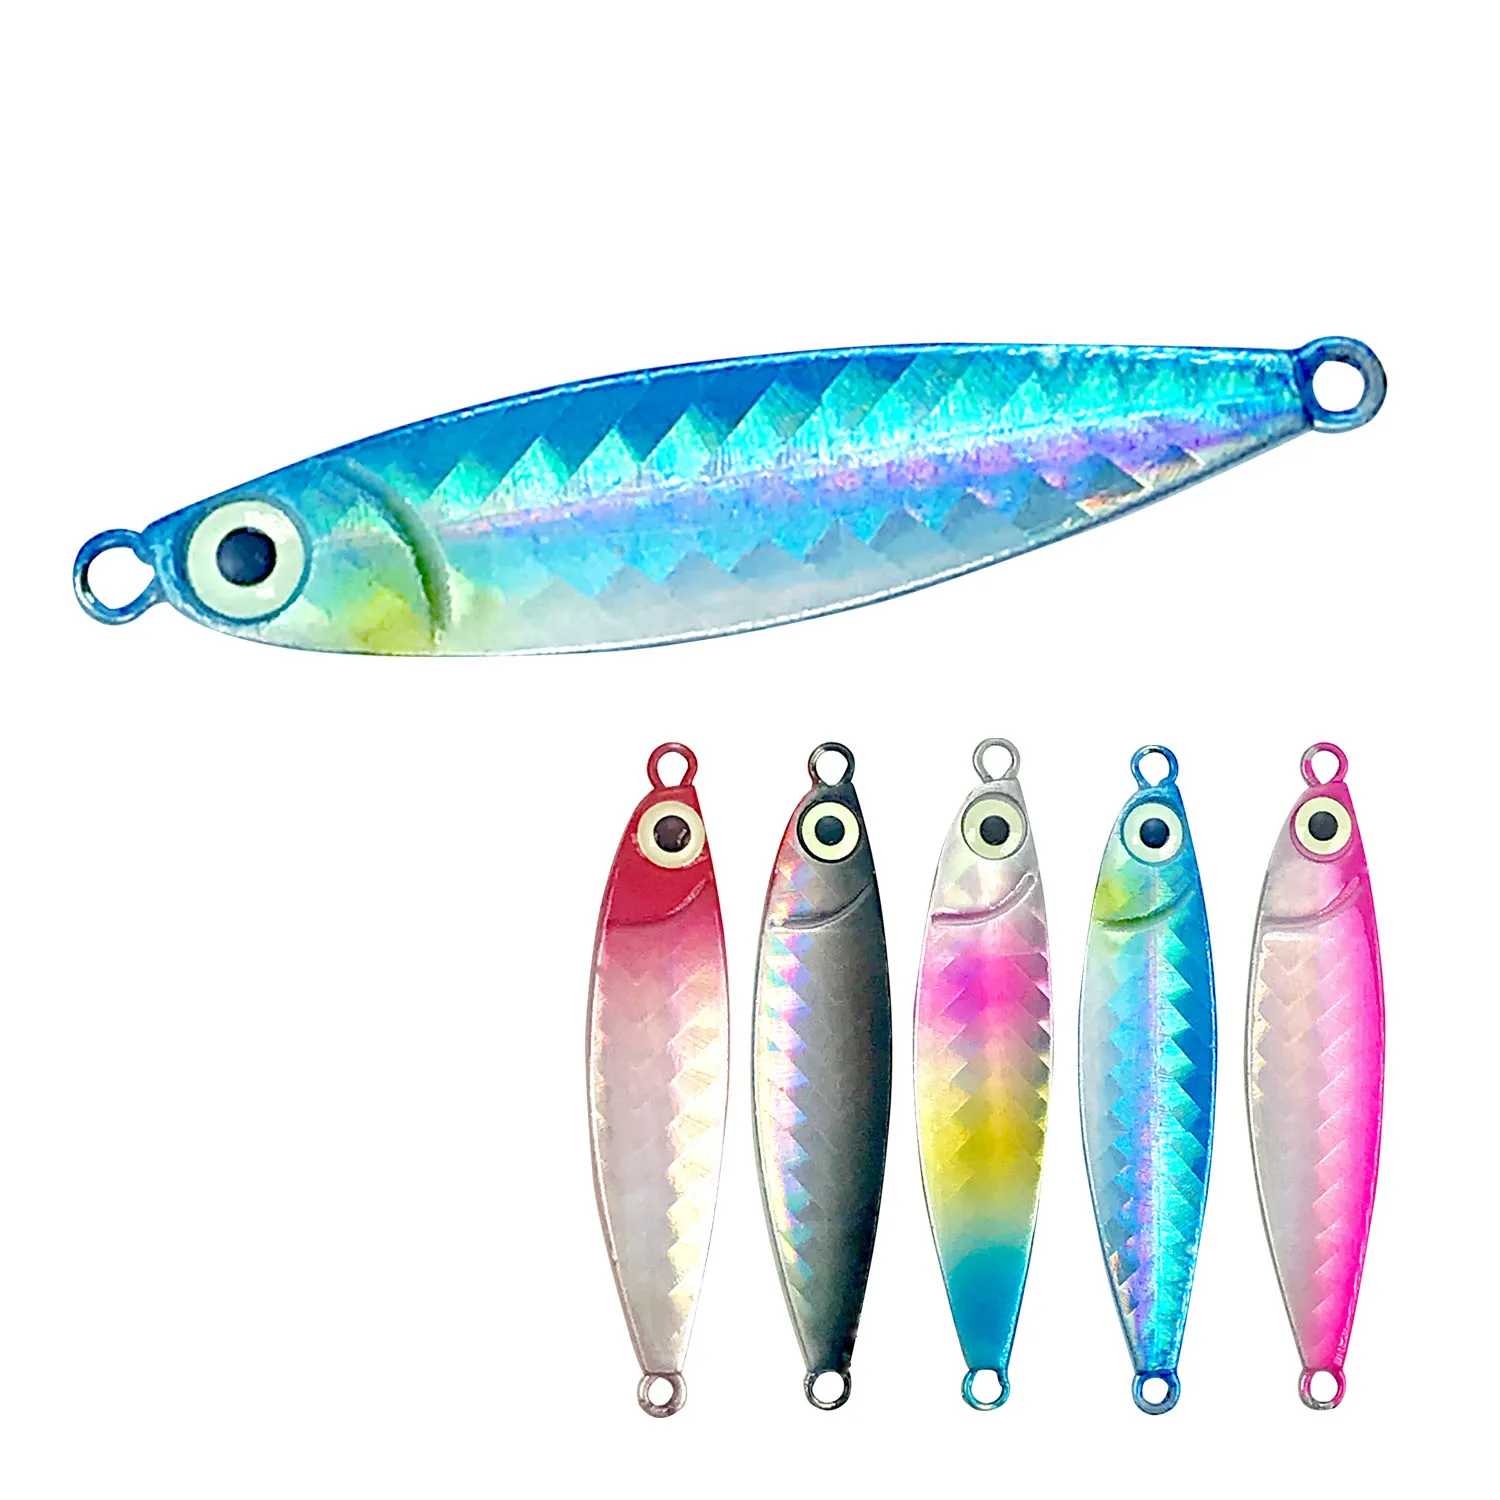 

Hot sale 10g 15g 20g 25g High Quality Slow Vertical Jigging Lure Hard Metal Jigs Lure Lead Fish Baits Fishing Jig, 5 colors